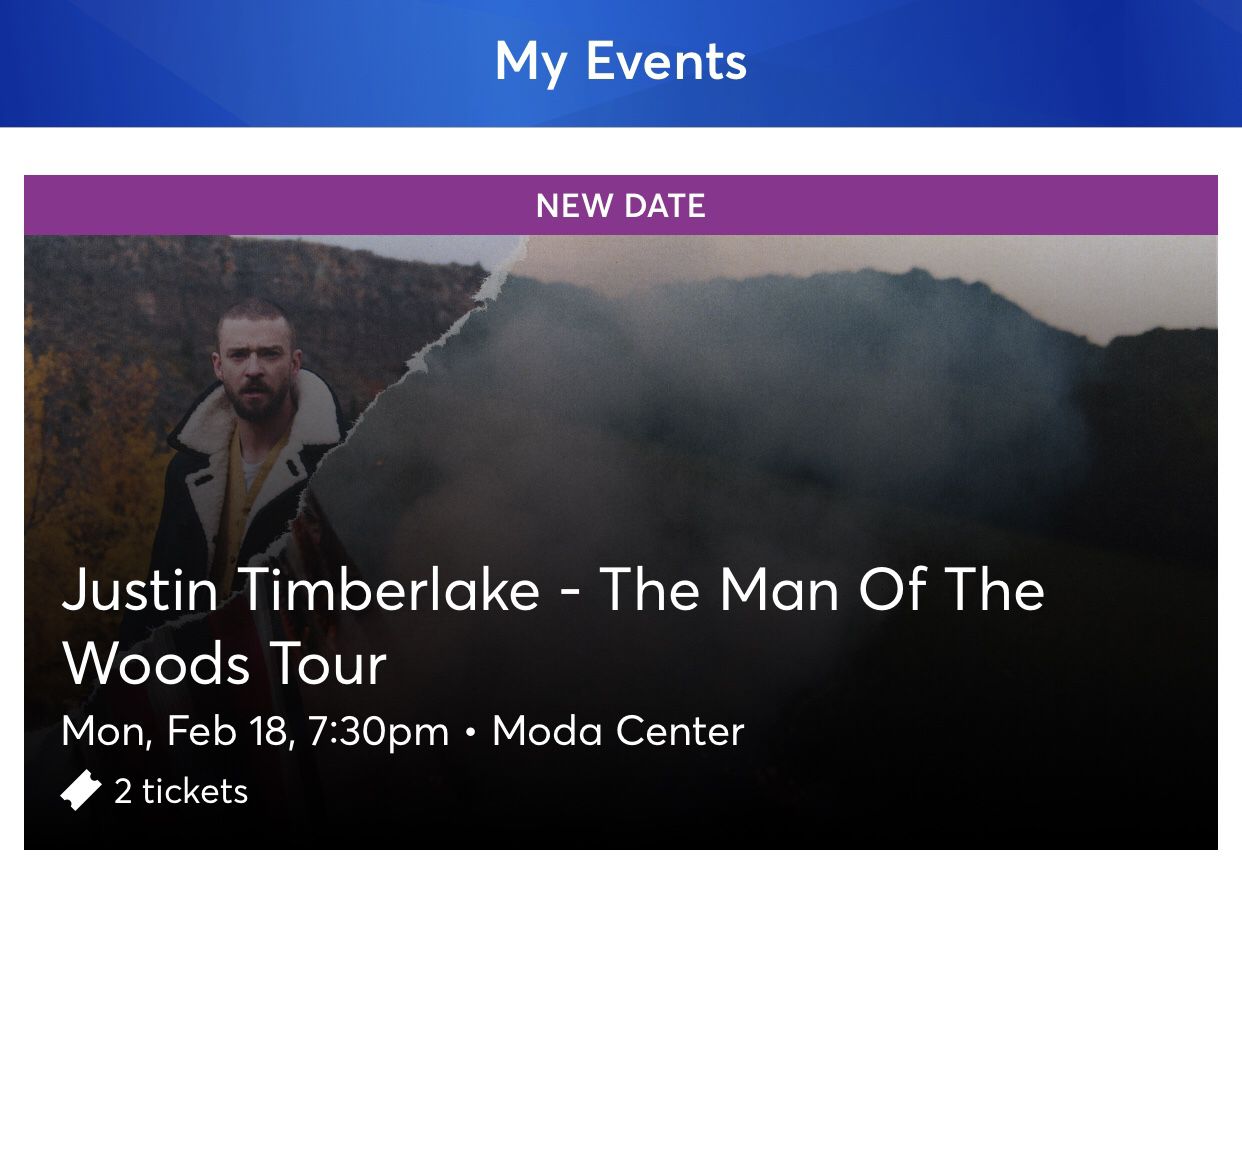 Justin Timberlake Tickets (2)